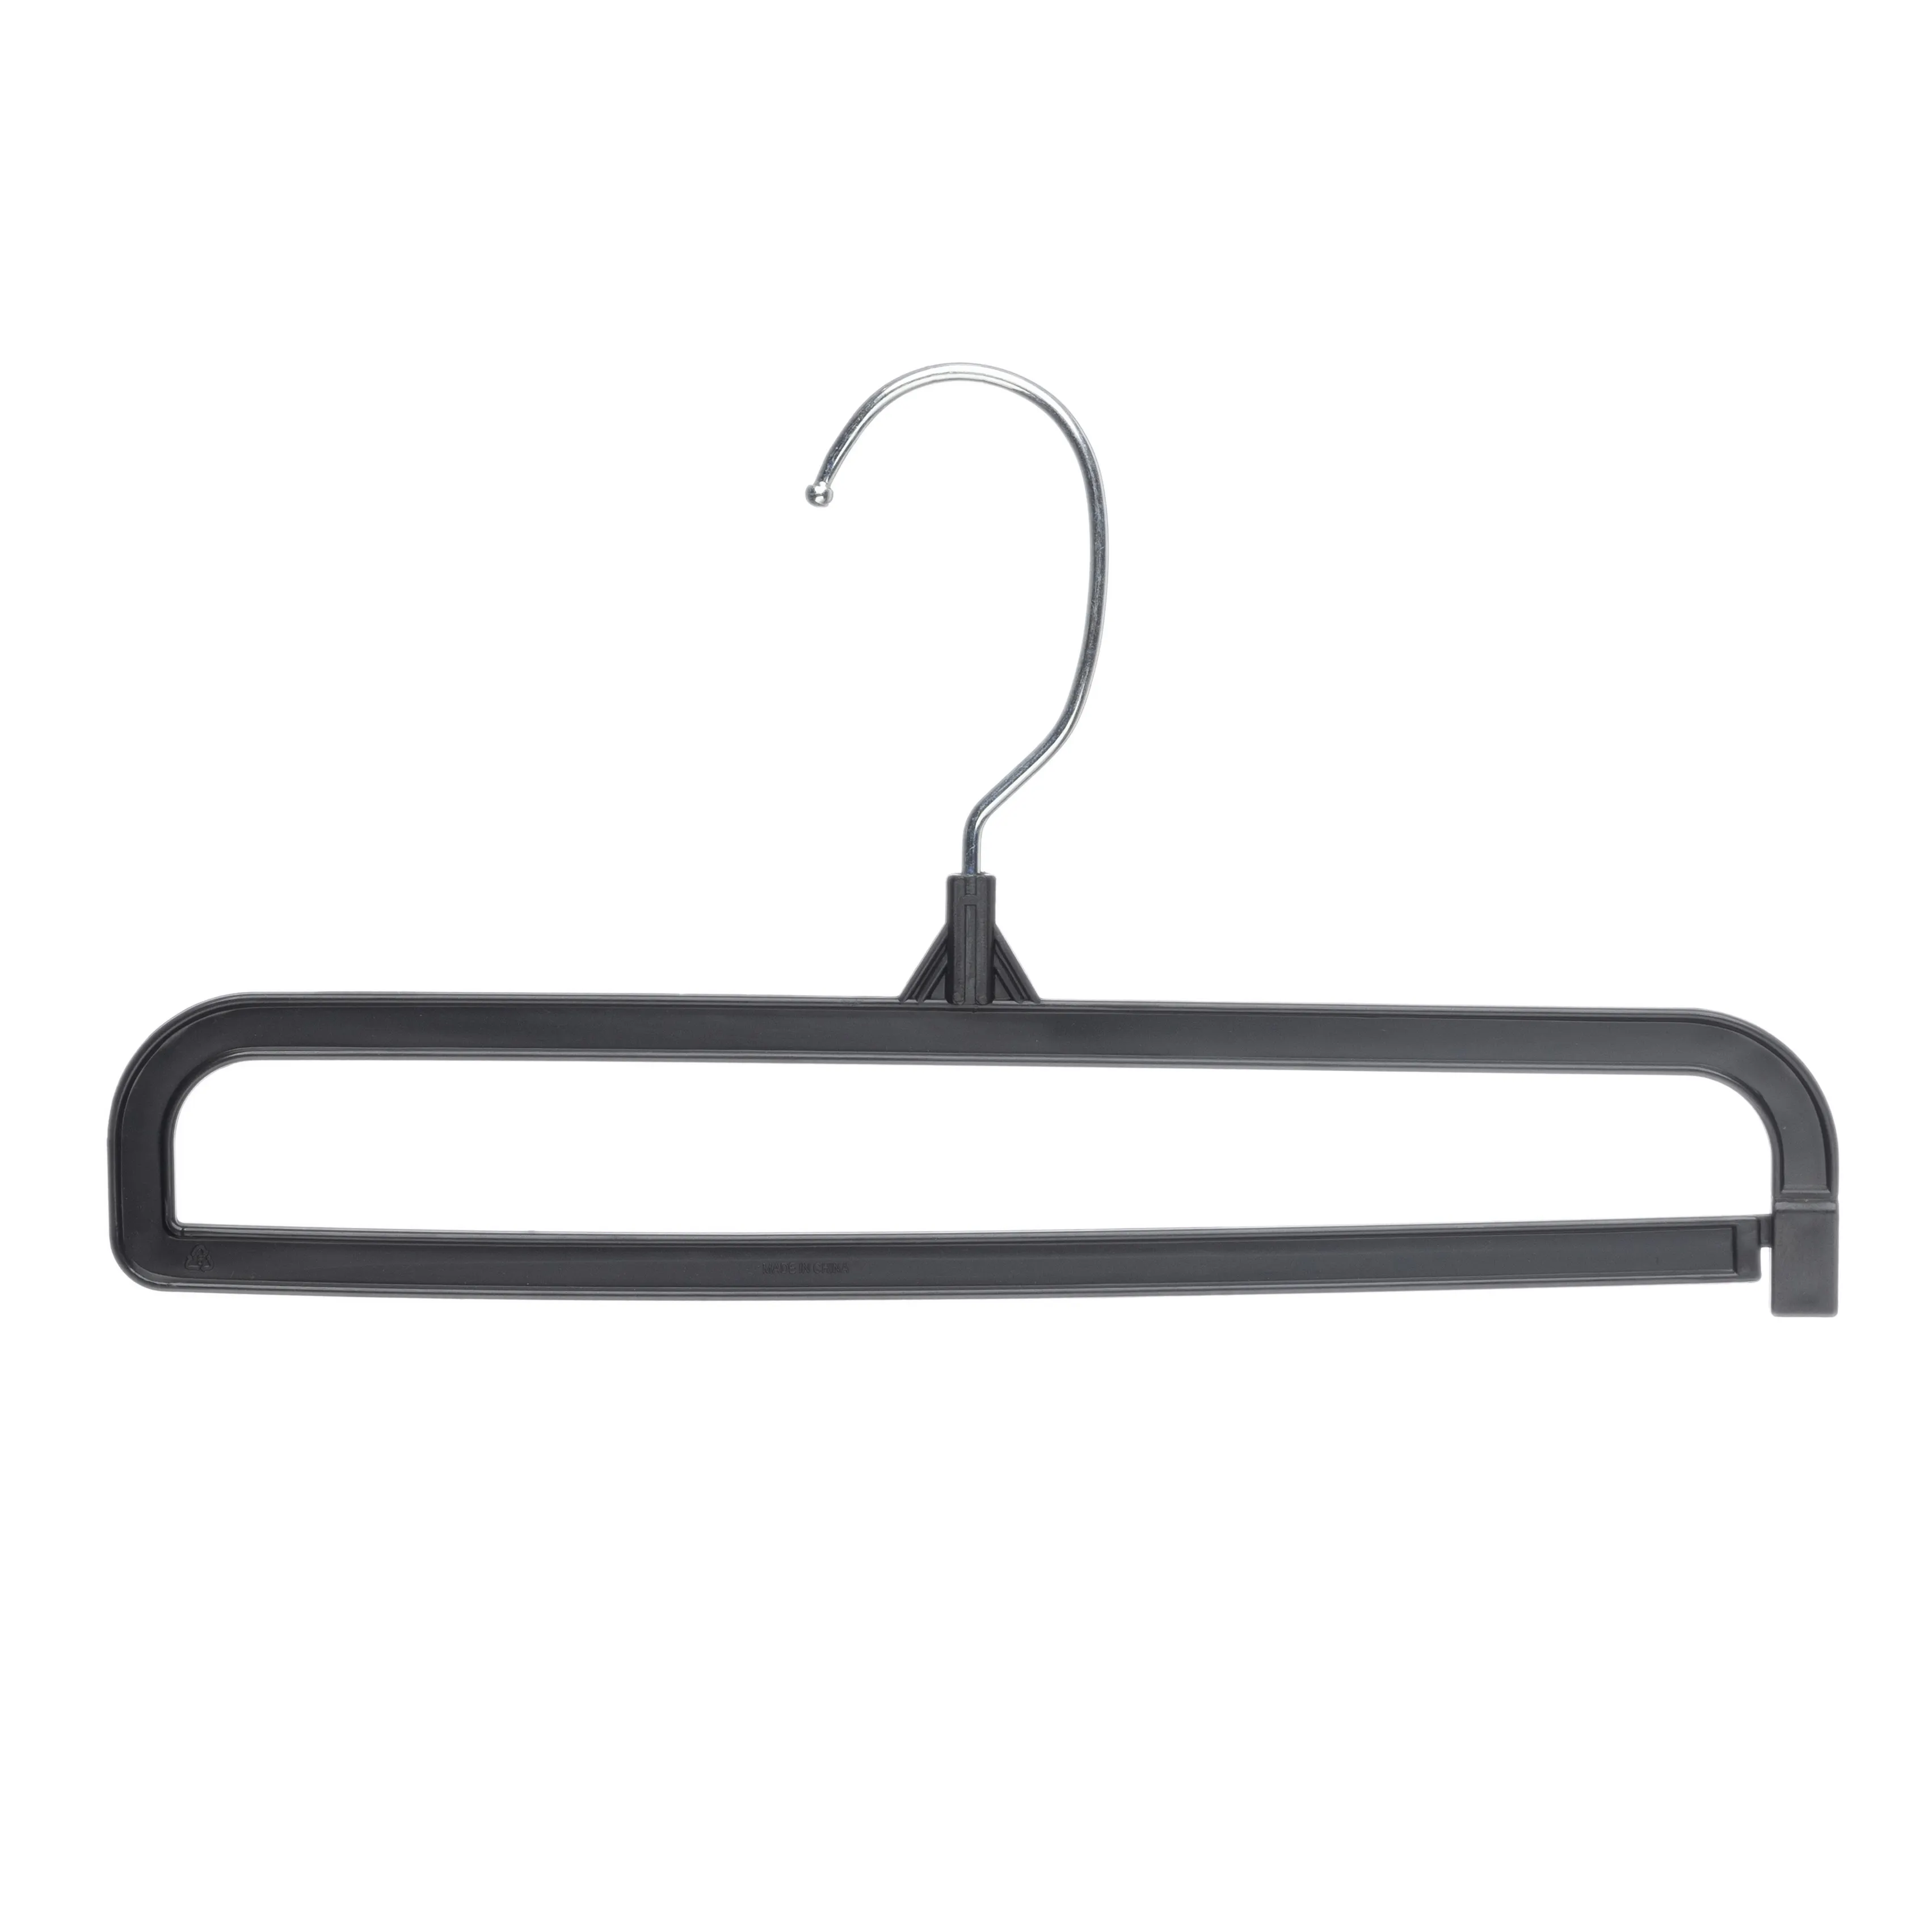 LEEKING Manufacturer direct selling durable high-quality scarf holder towel rack multifunctional plastic hangers